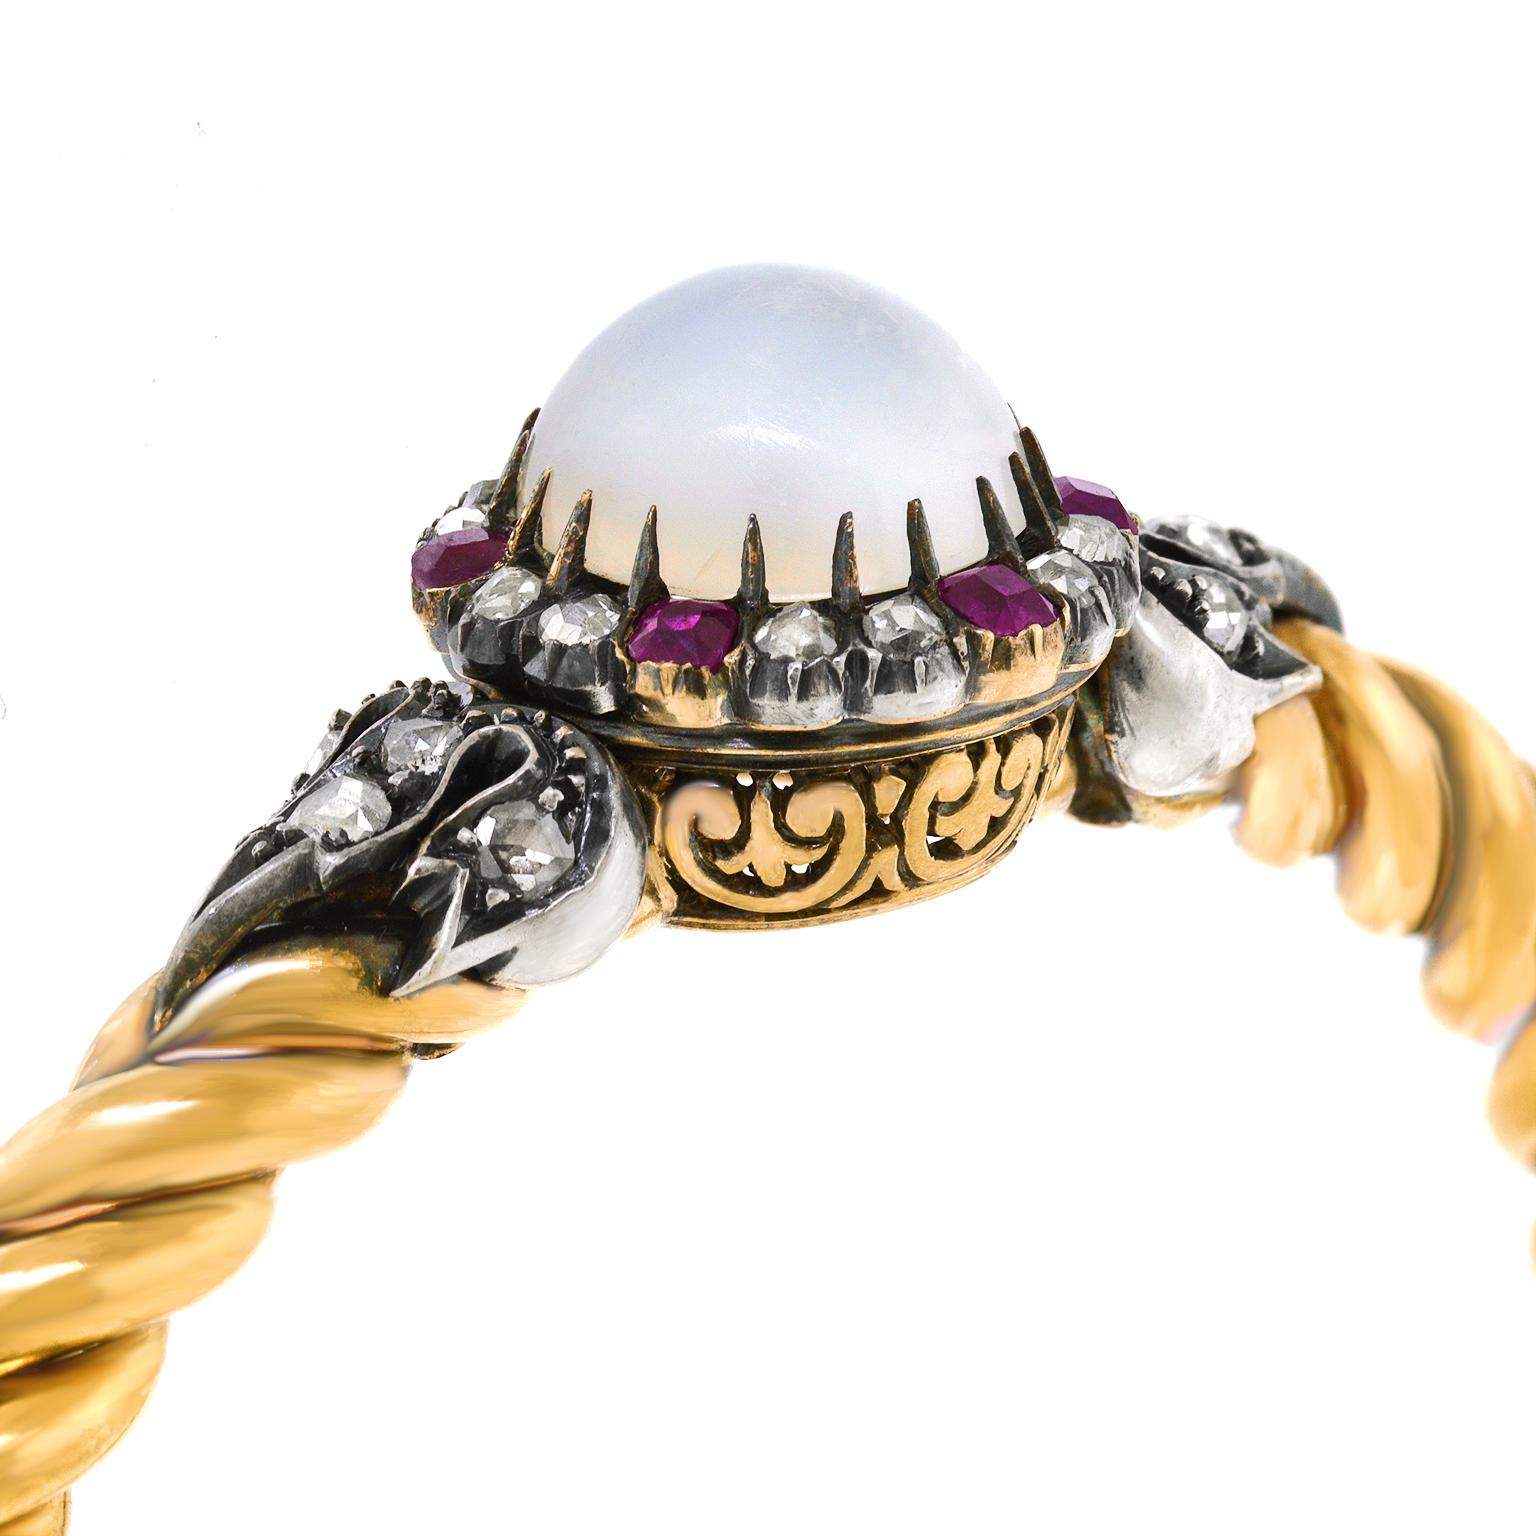 Victorian Moonstone, Ruby and Diamond Bracelet 18k c1870s France For Sale